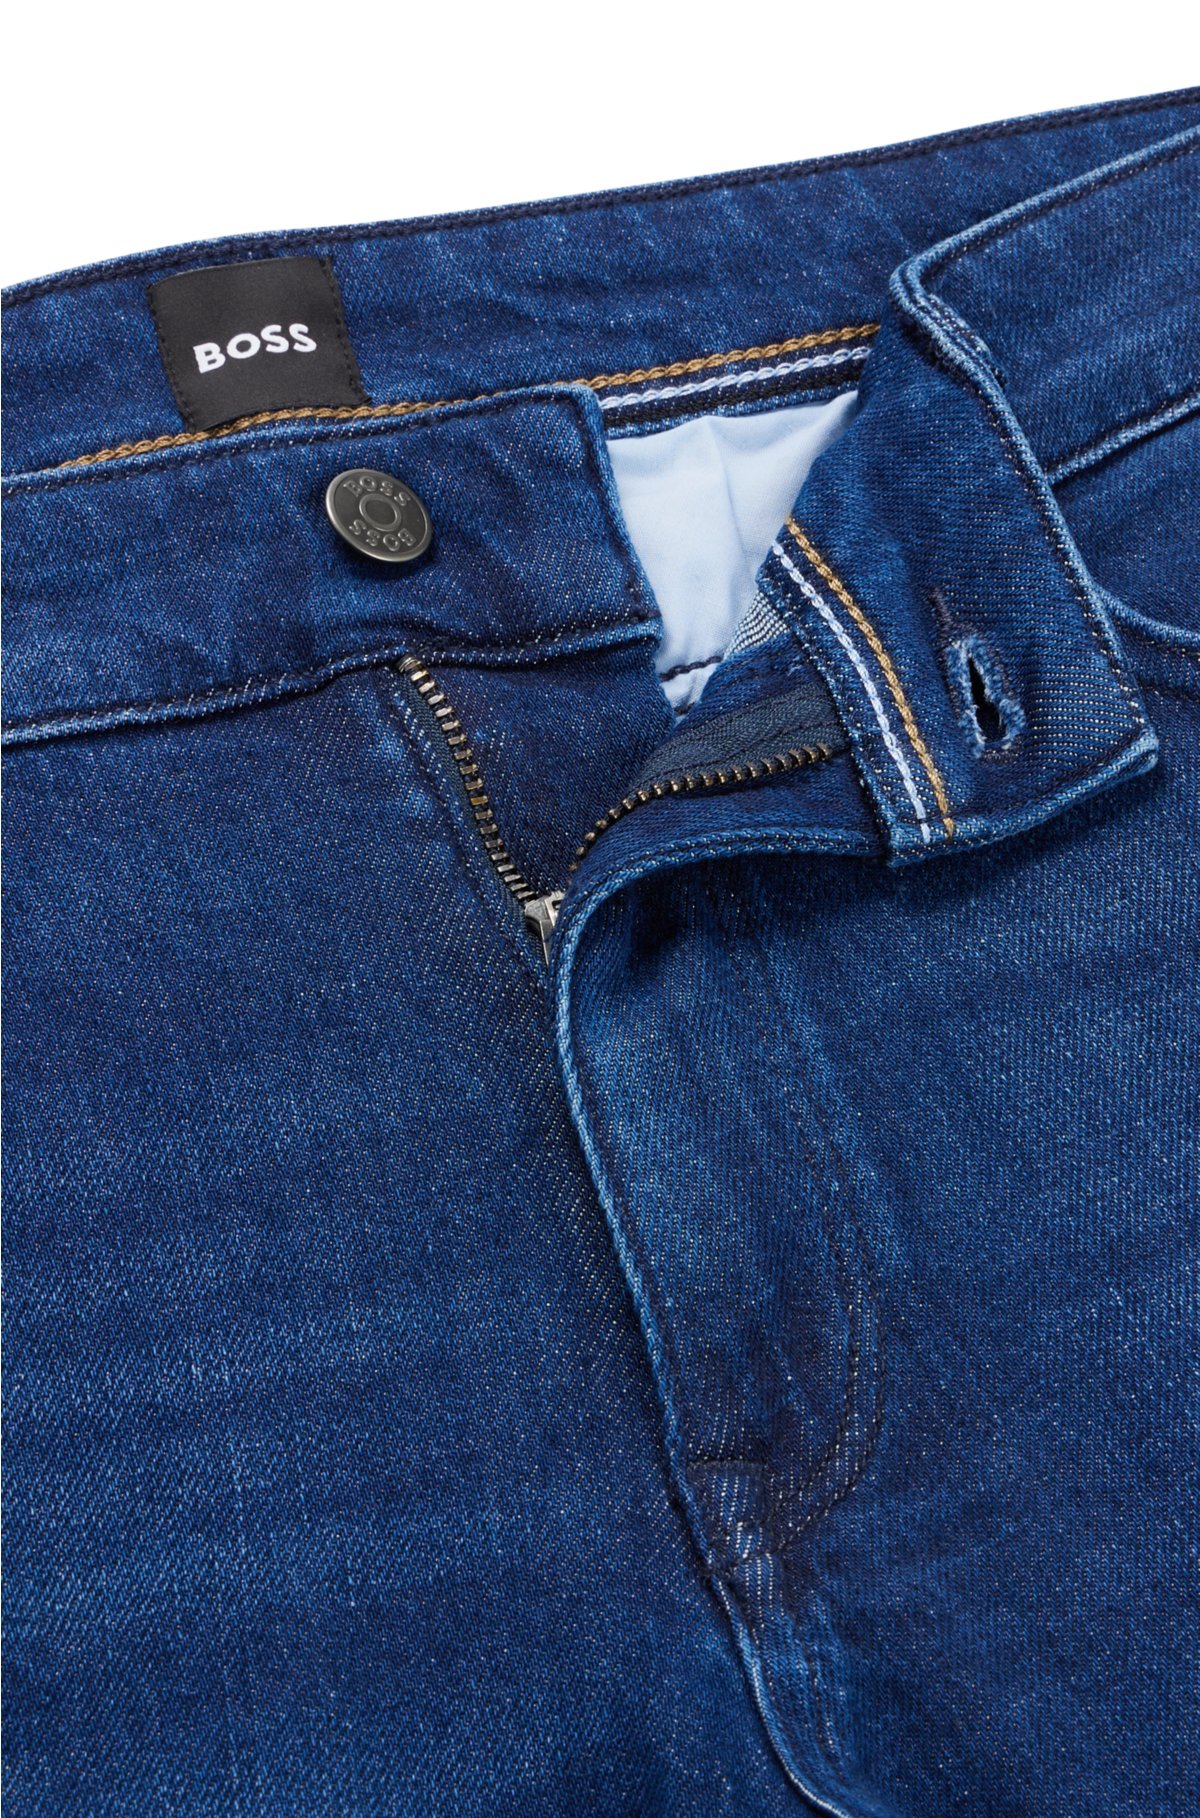 BOSS - Dunkelblaue Stretch-Denim Regular-Fit bequemem aus Jeans